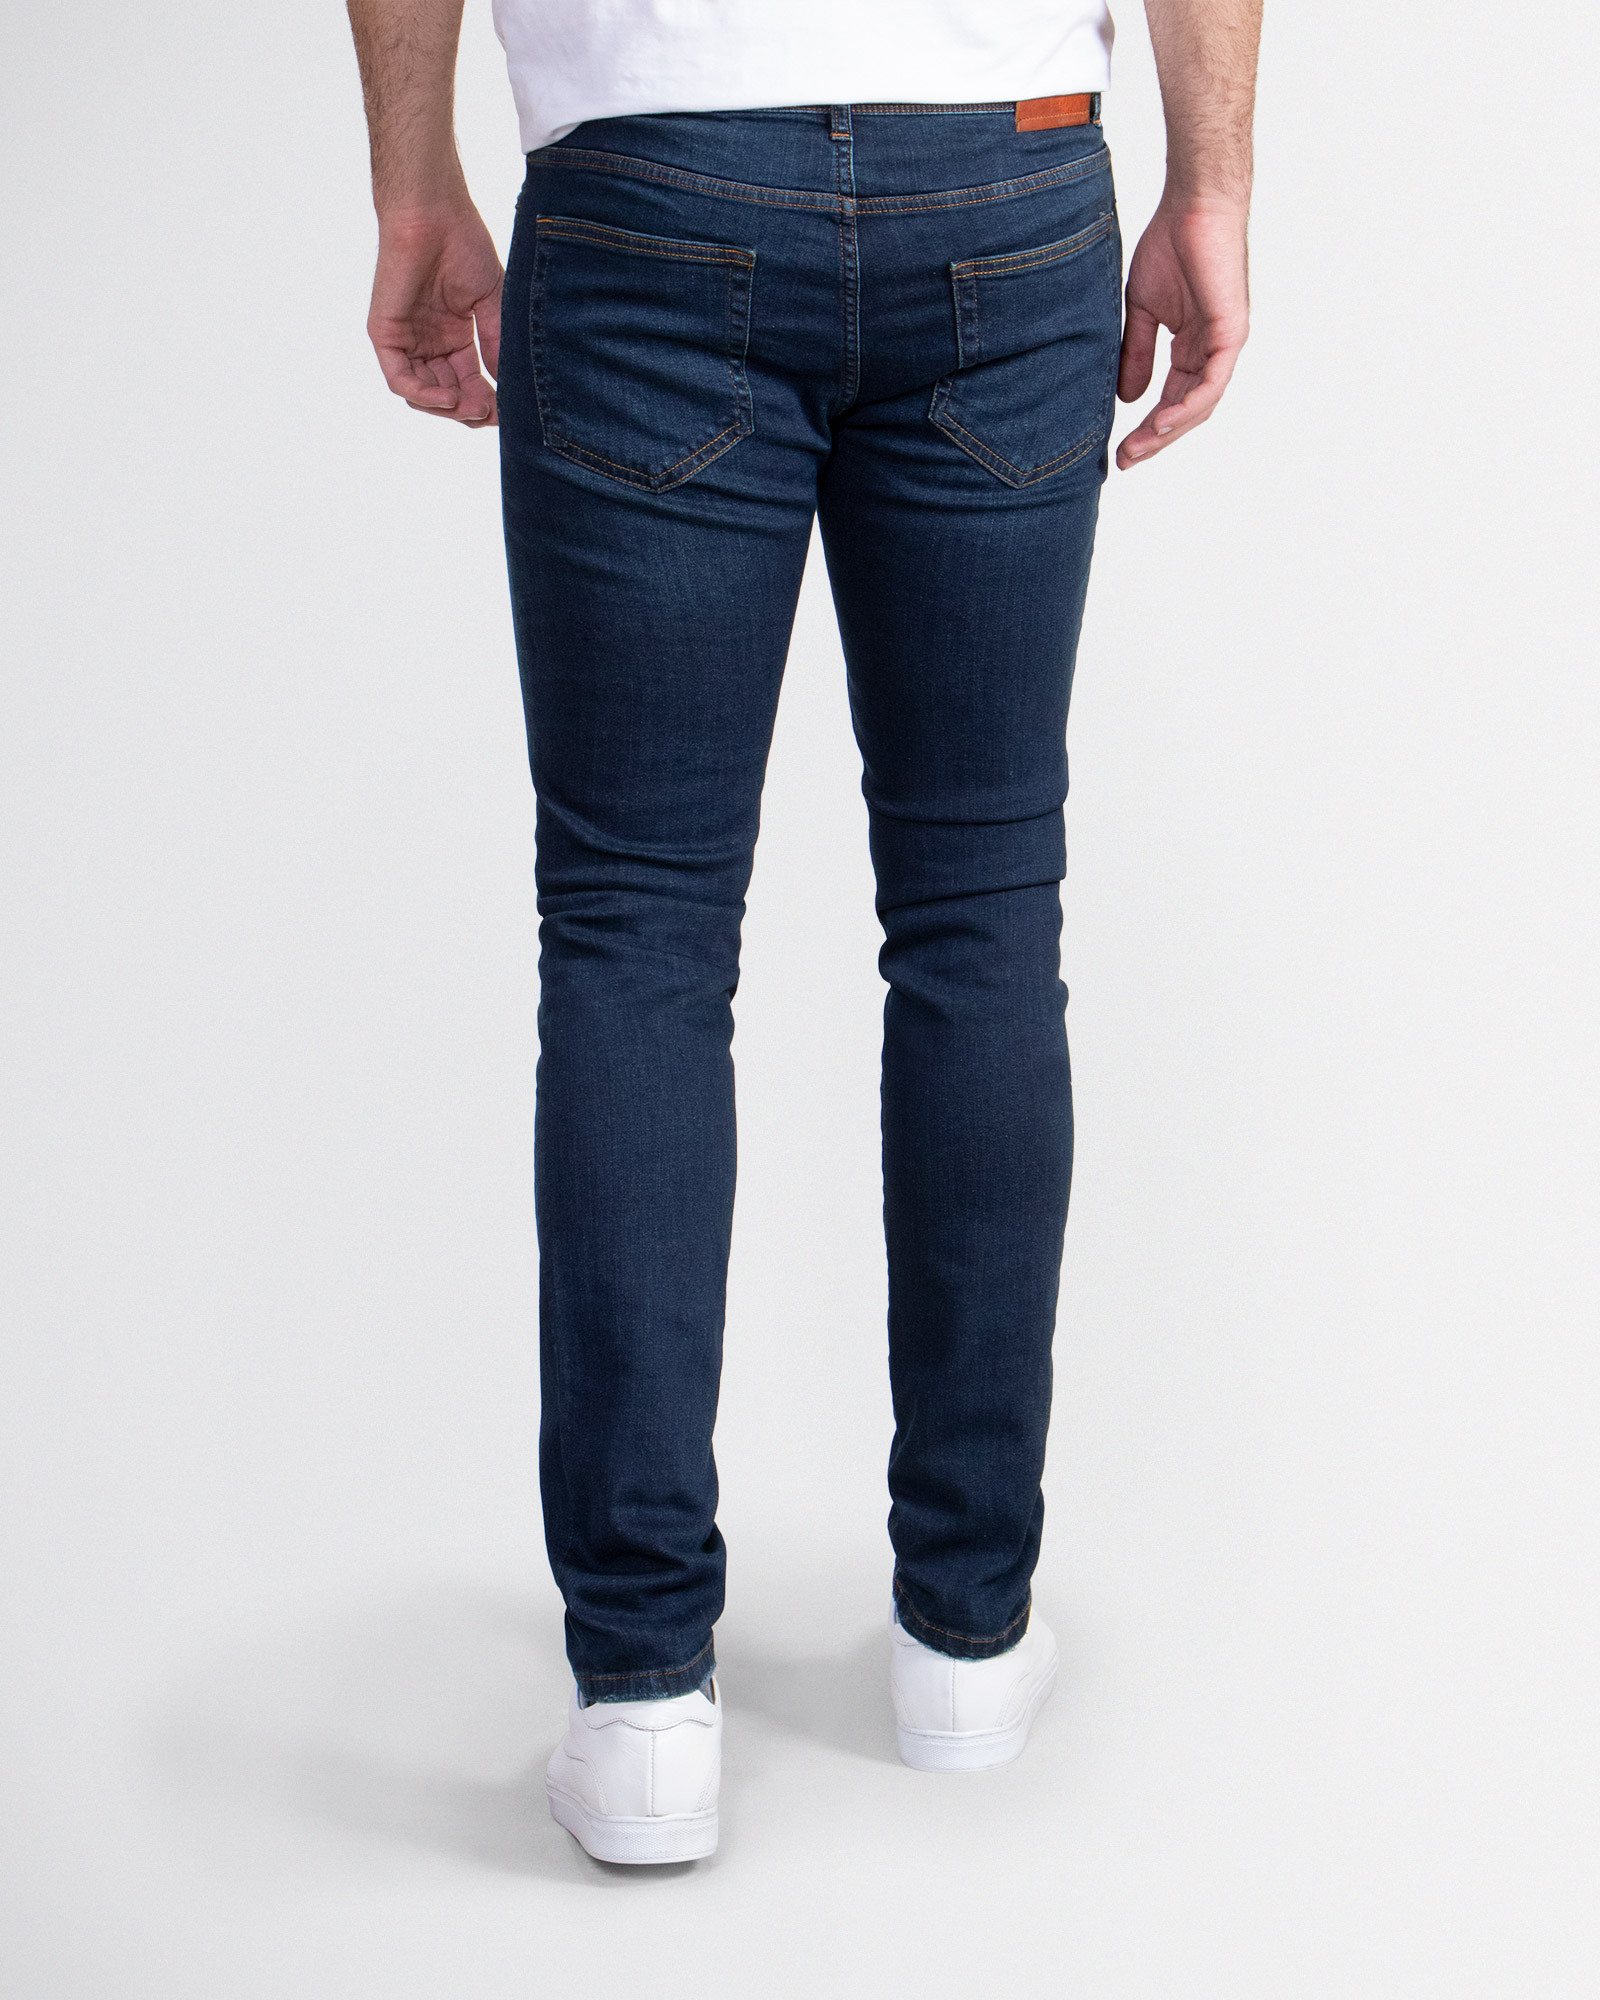 شلوار جین زاپ دار مردانه آبی تیره19224436